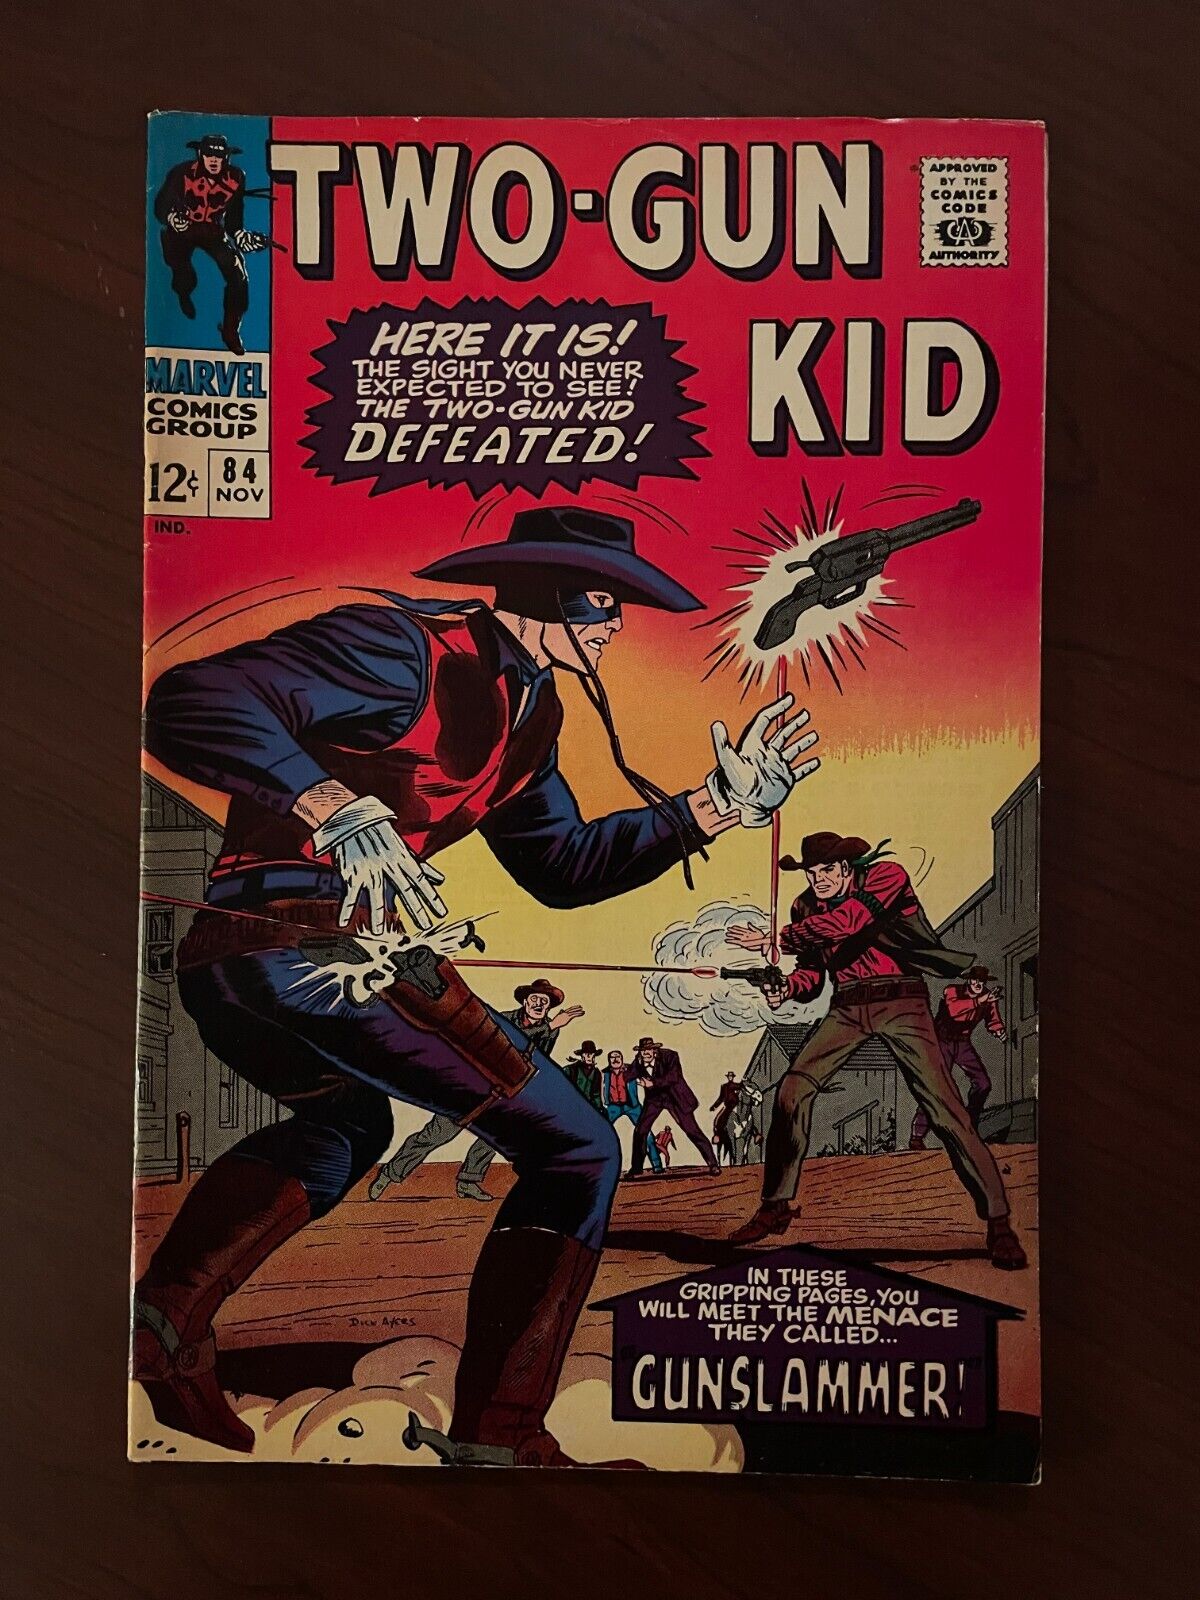 Two-Gun Kid #84 (Marvel Comics 1965) Silver Age Western Gunslammer 7.5 VF-